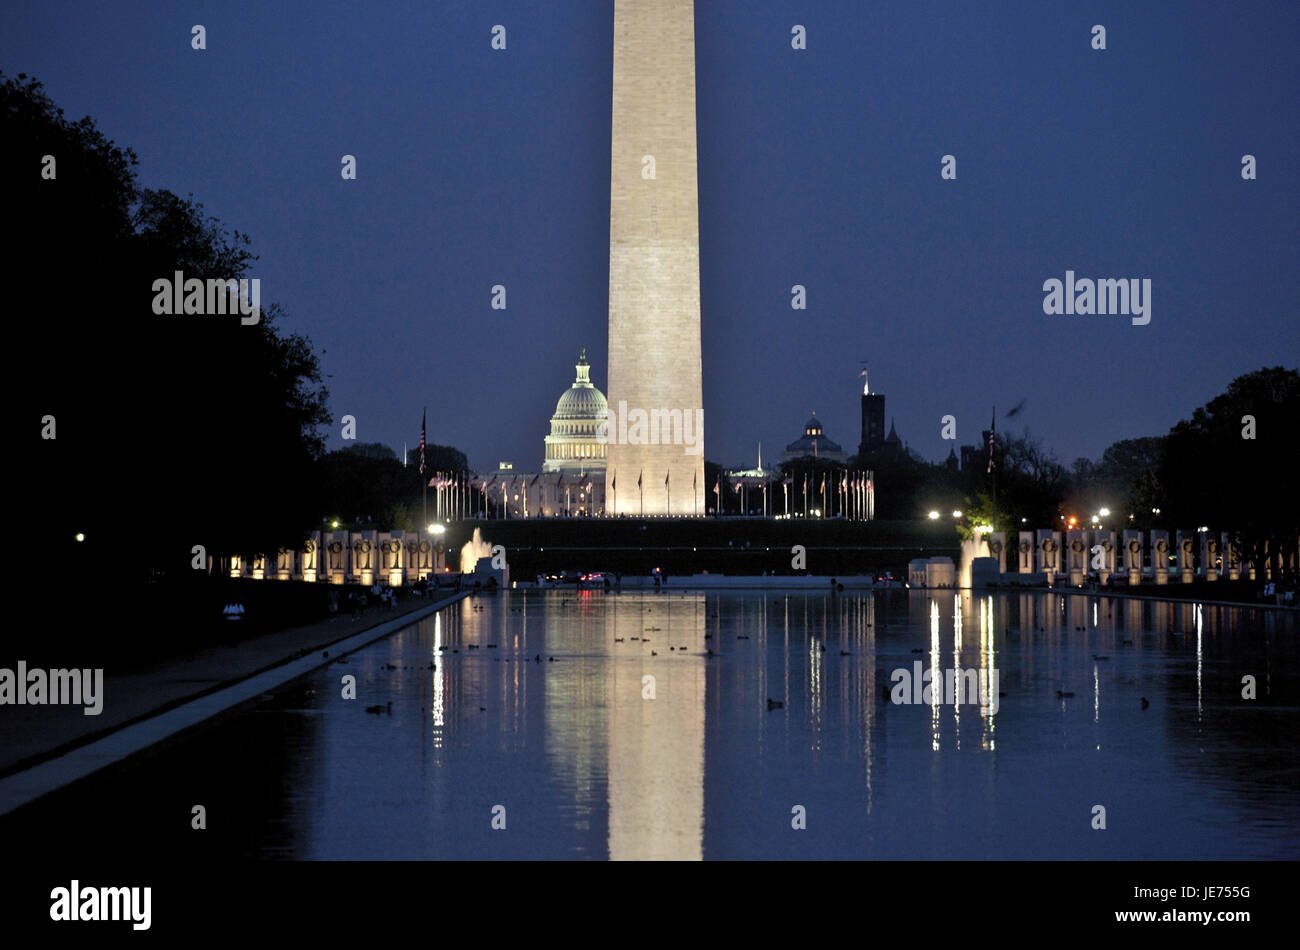 The USA, America, Washington D.C., night photography, Washington monument, Capitol in the background, Stock Photo